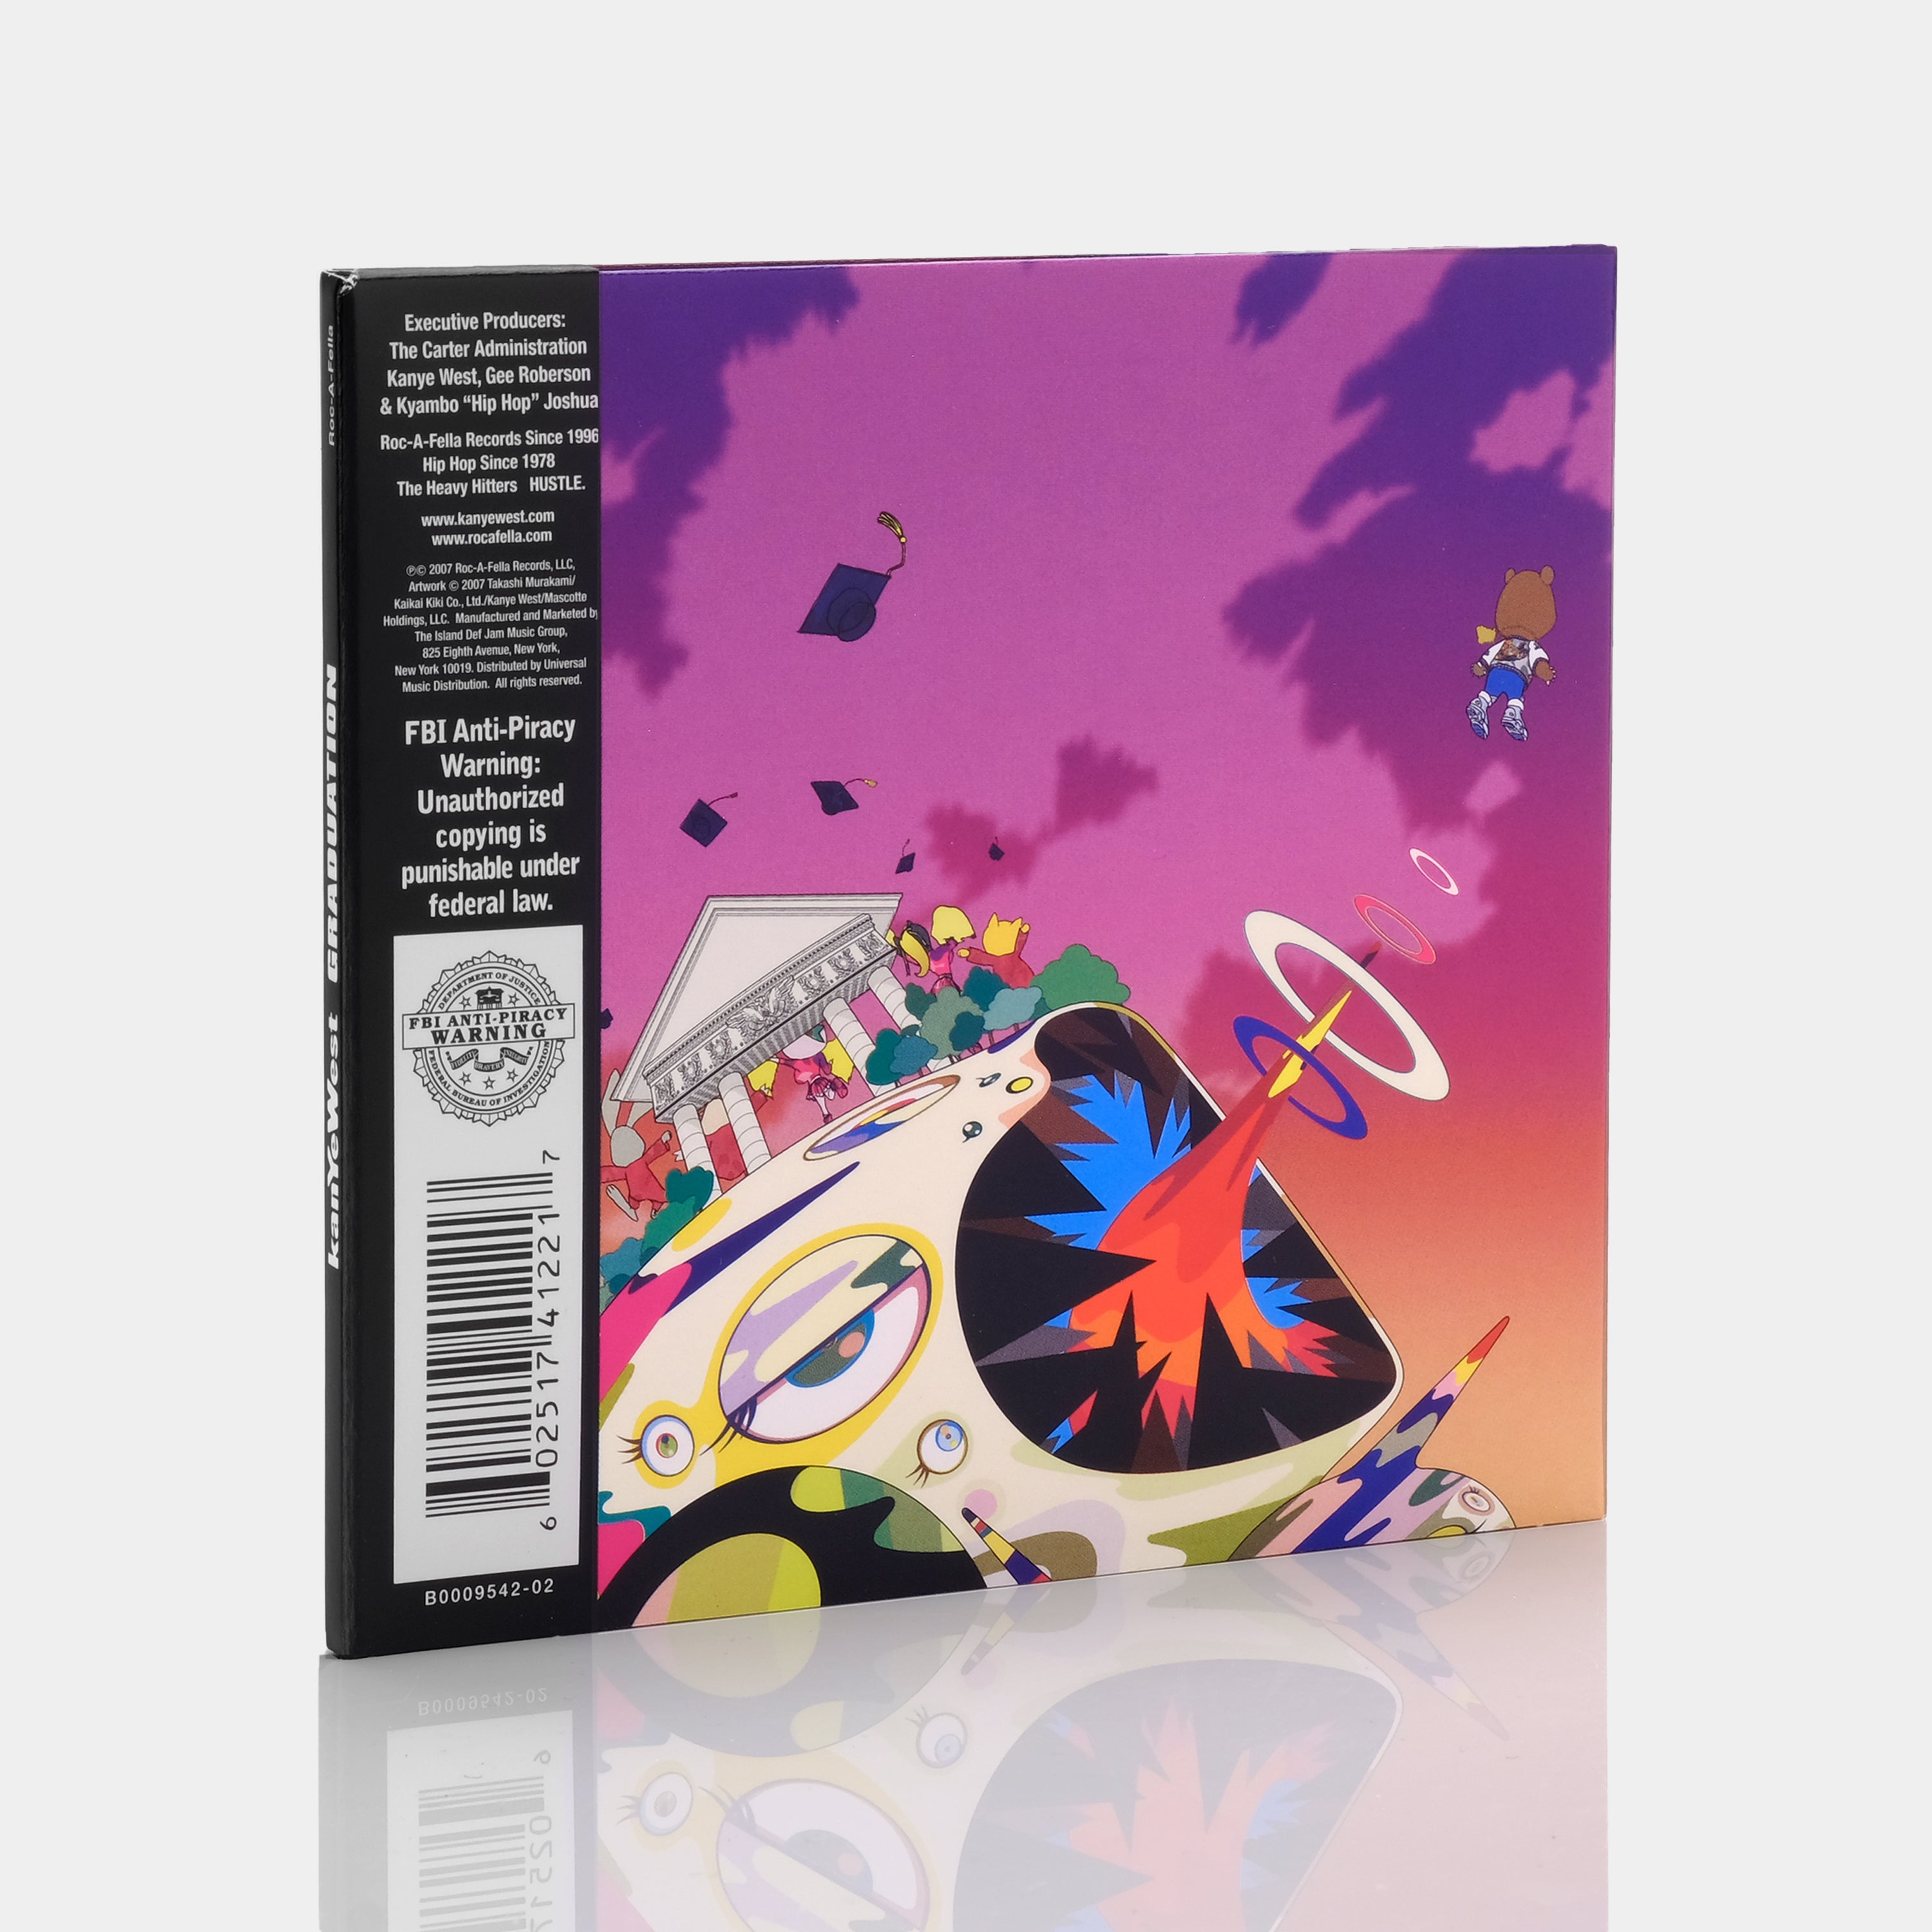 Kanye West - Graduation (Enhanced) CD